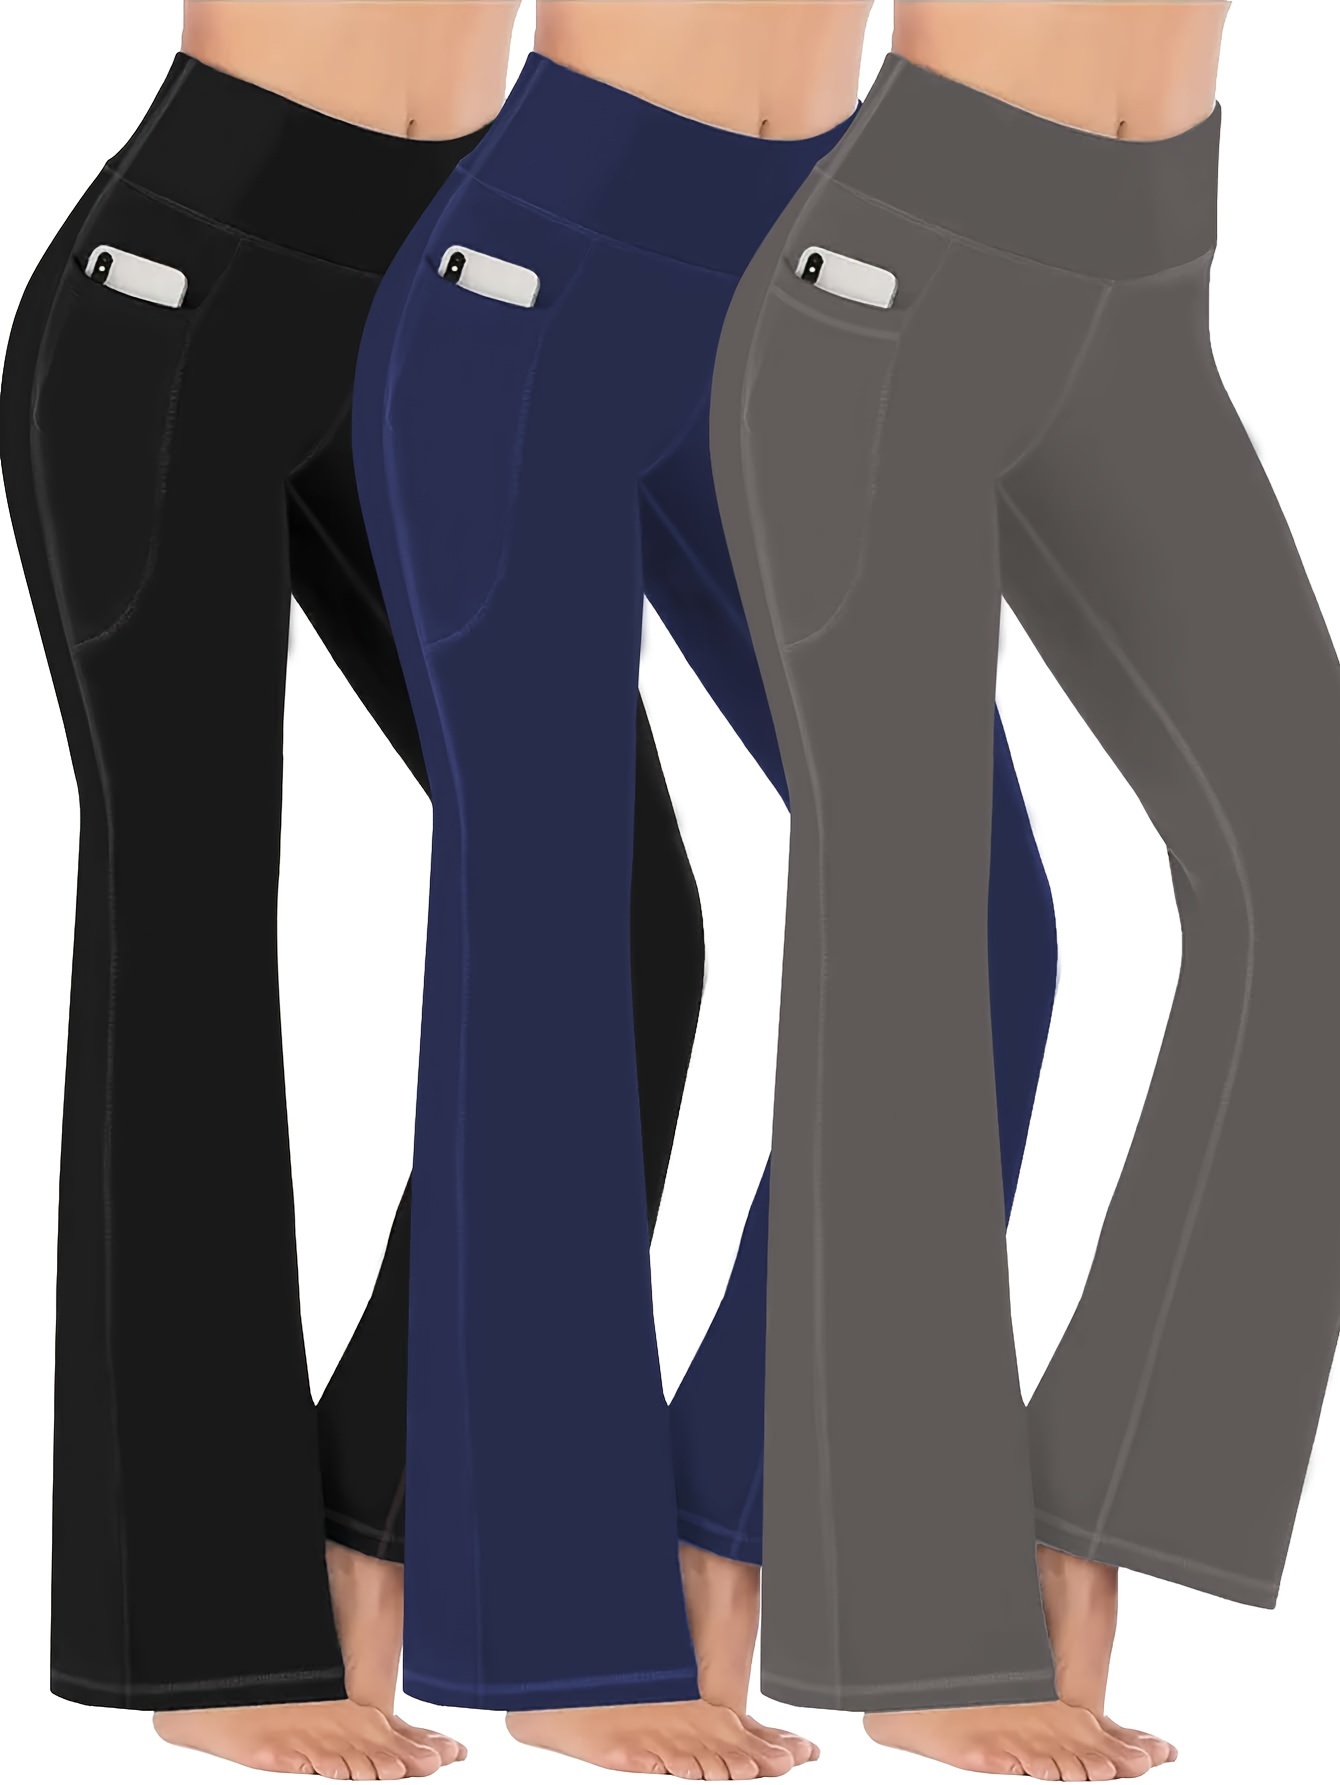 IUGA Bootcut Yoga Pants For Women